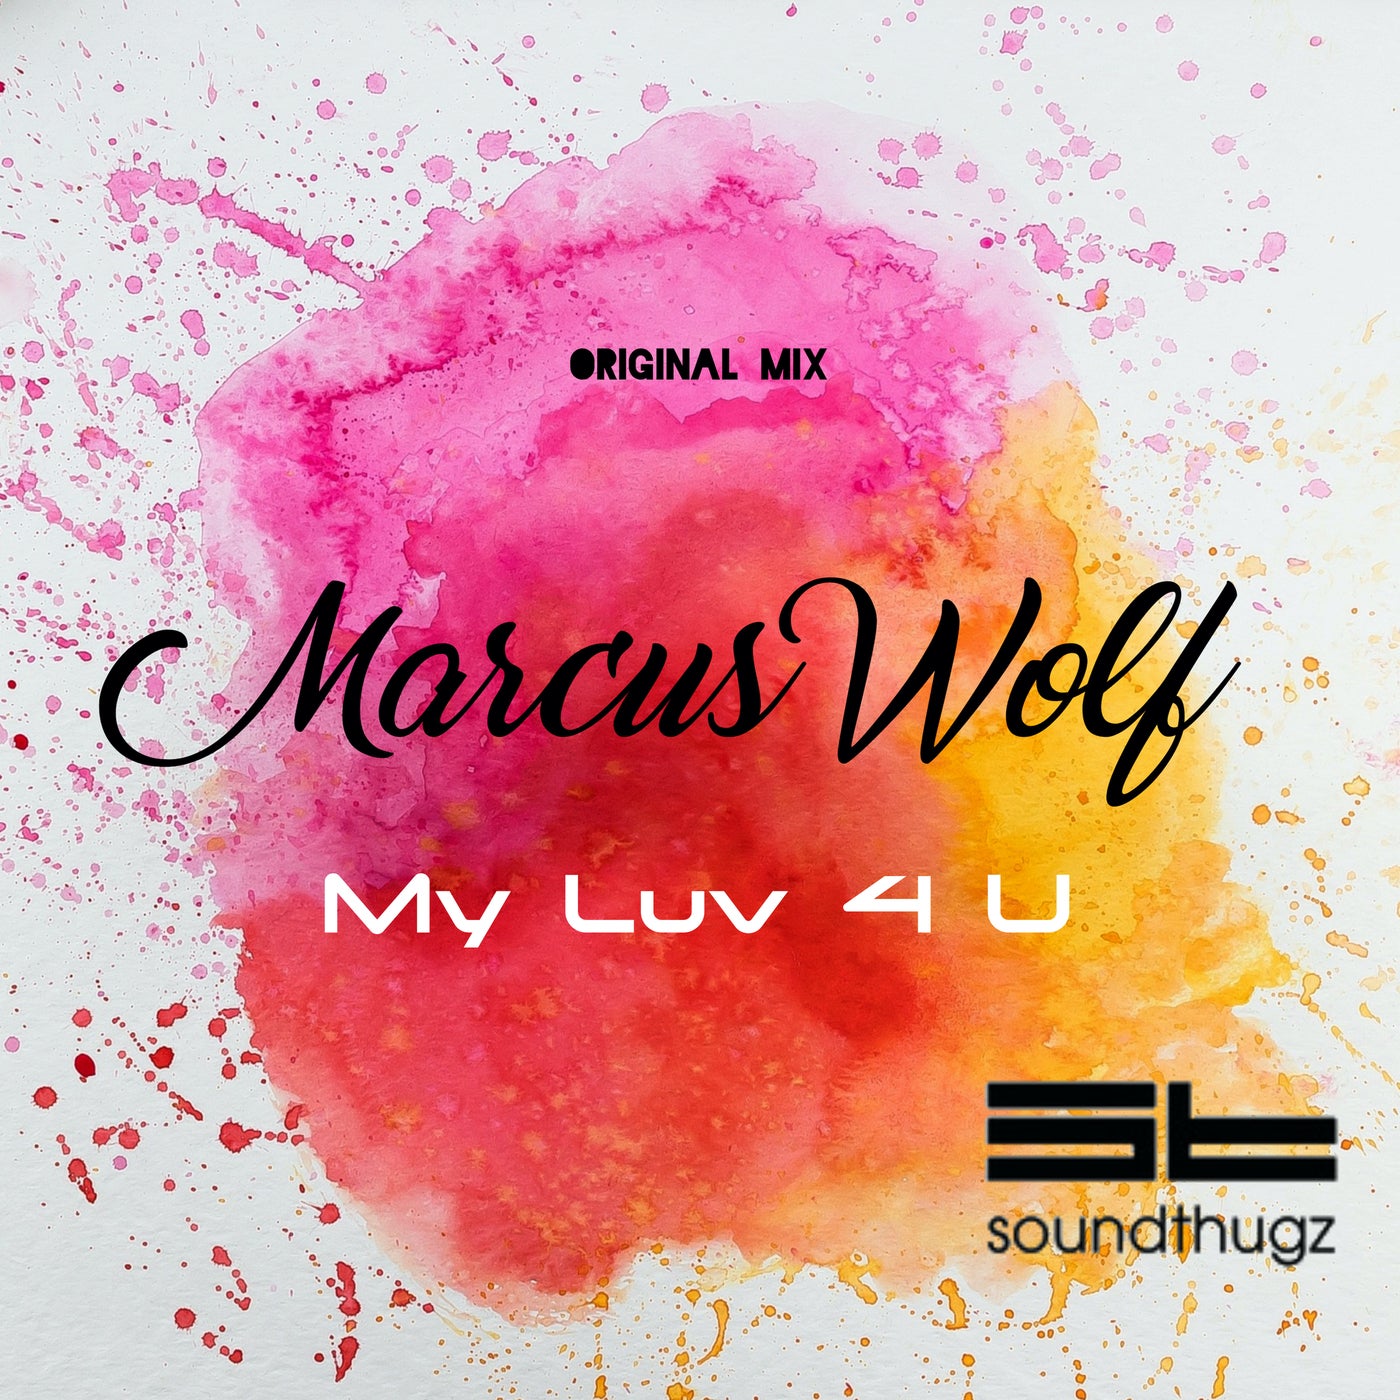 Marcus Wolf - My Luv 4 U